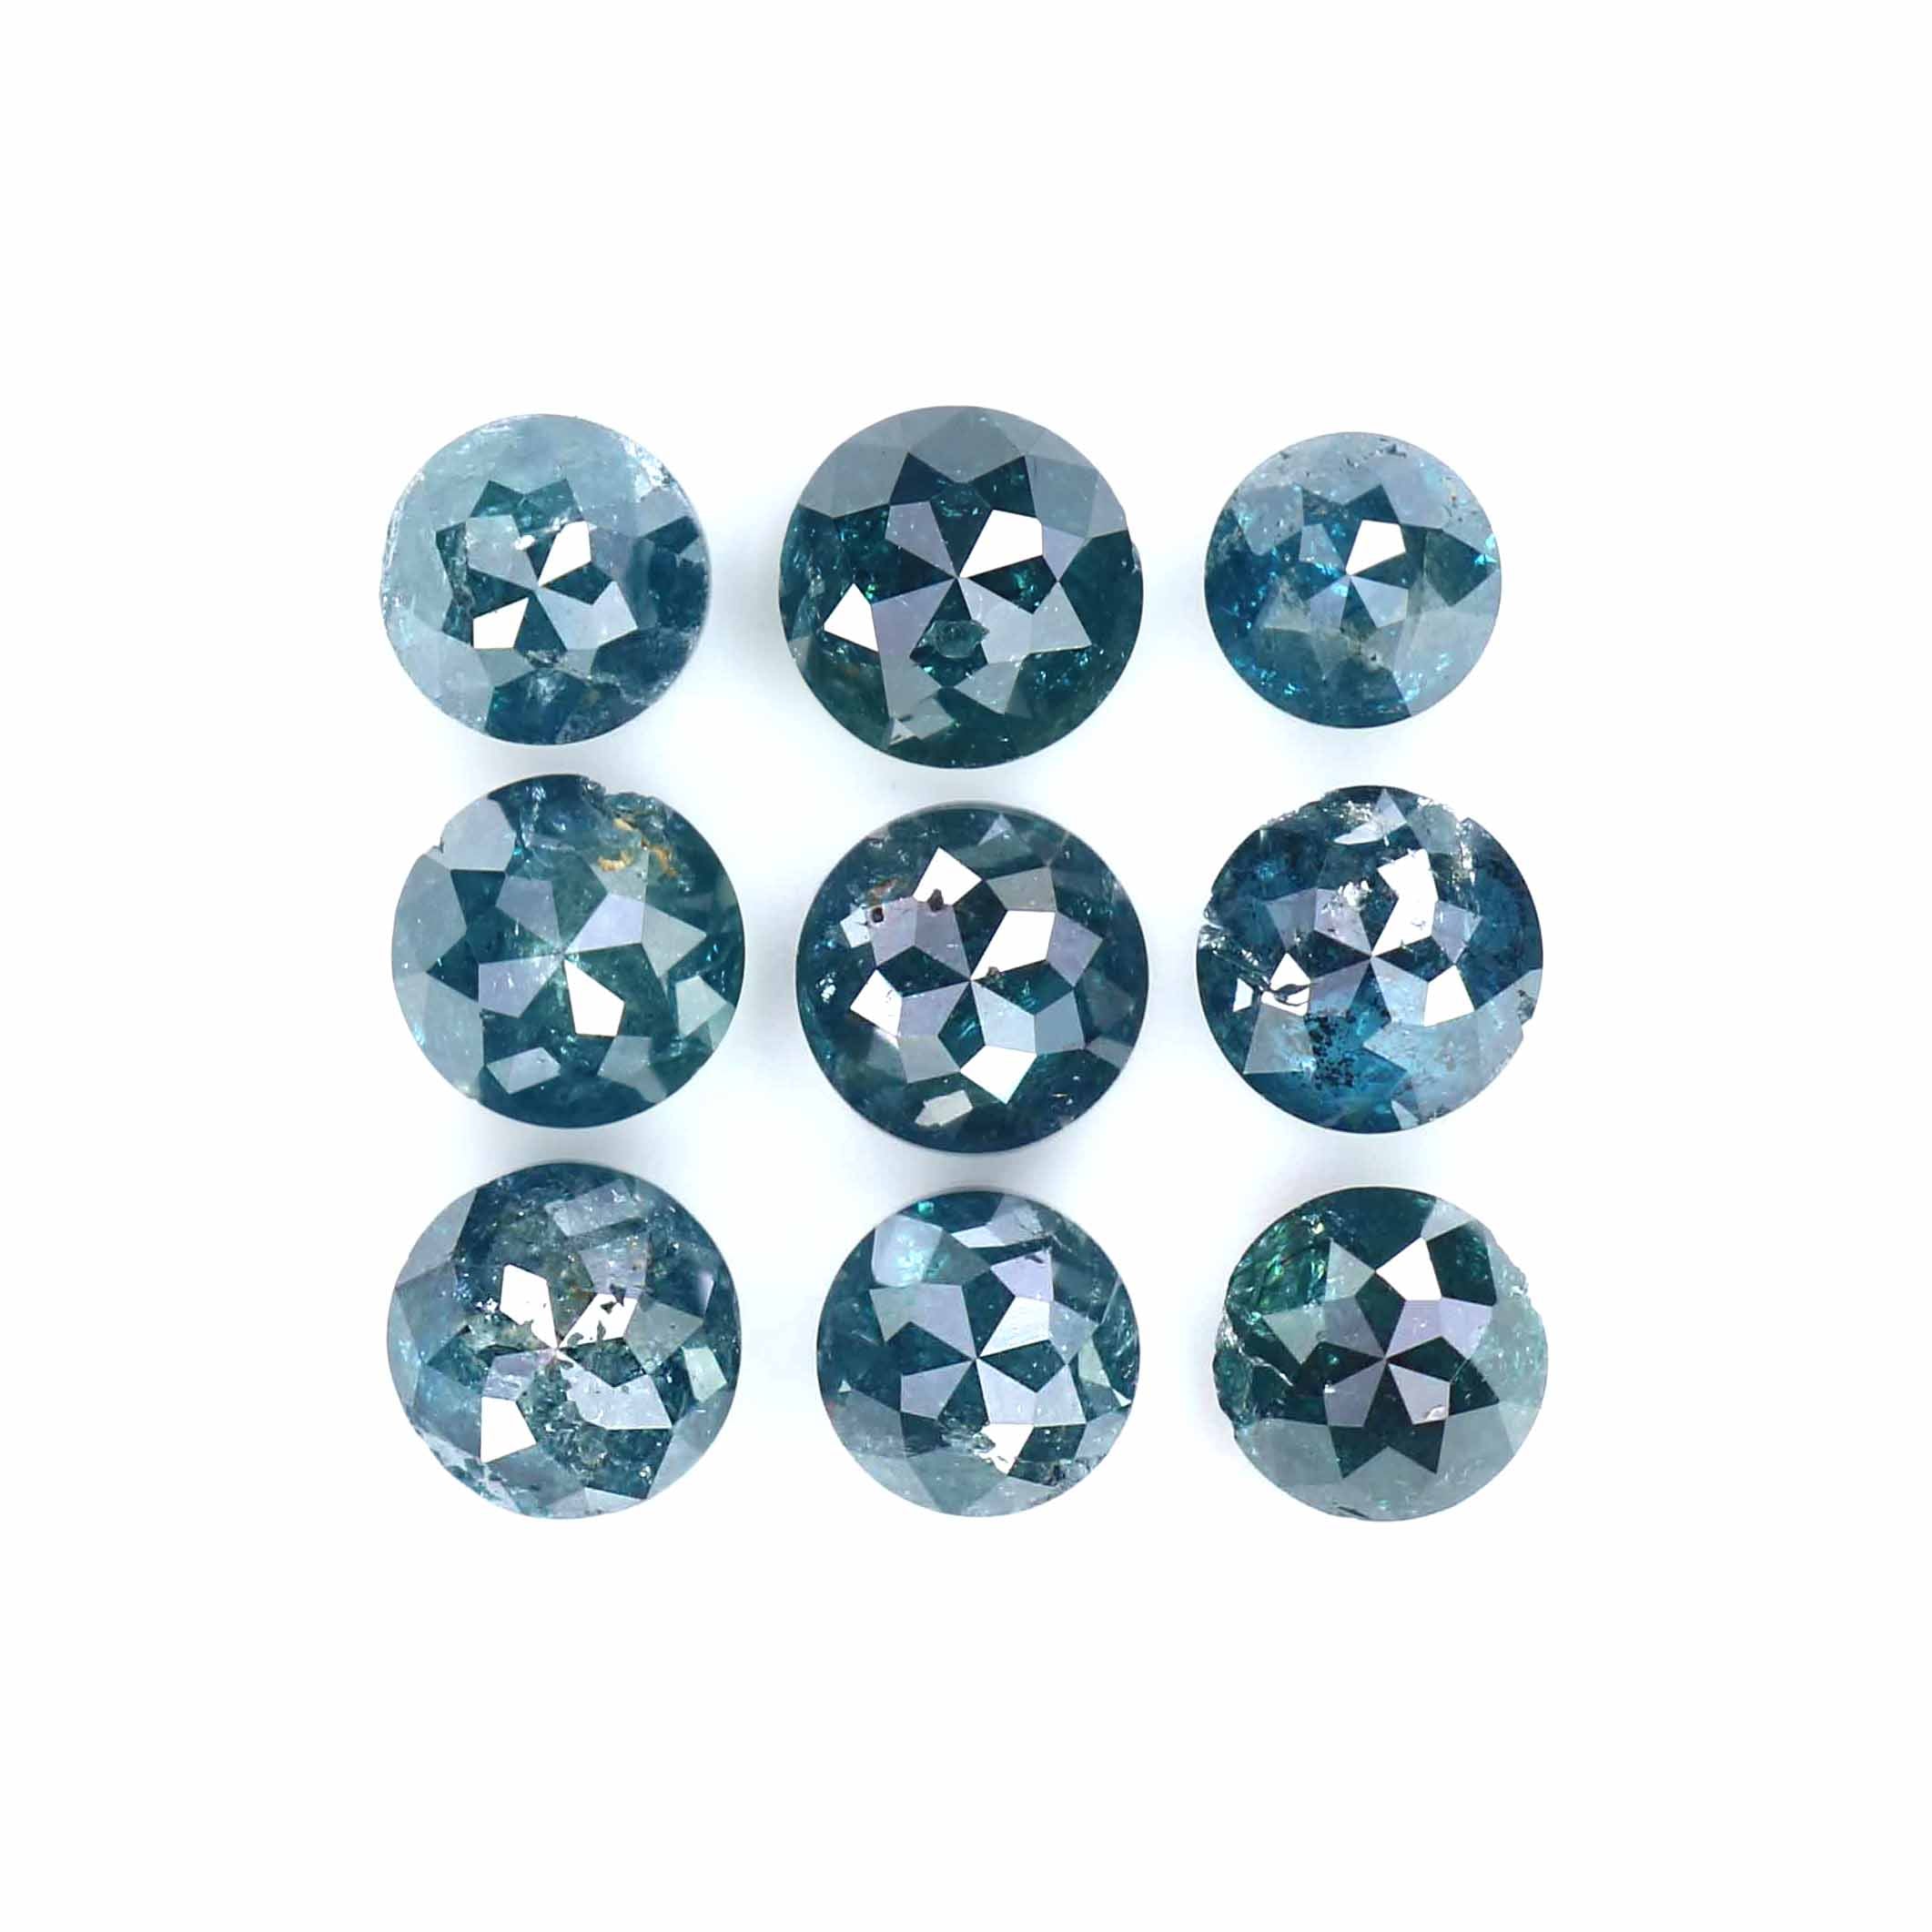 Natural Loose Rose Cut Blue Color Diamond 3.76 CT 3.80 MM Round Rose Cut Shape Diamond L2382